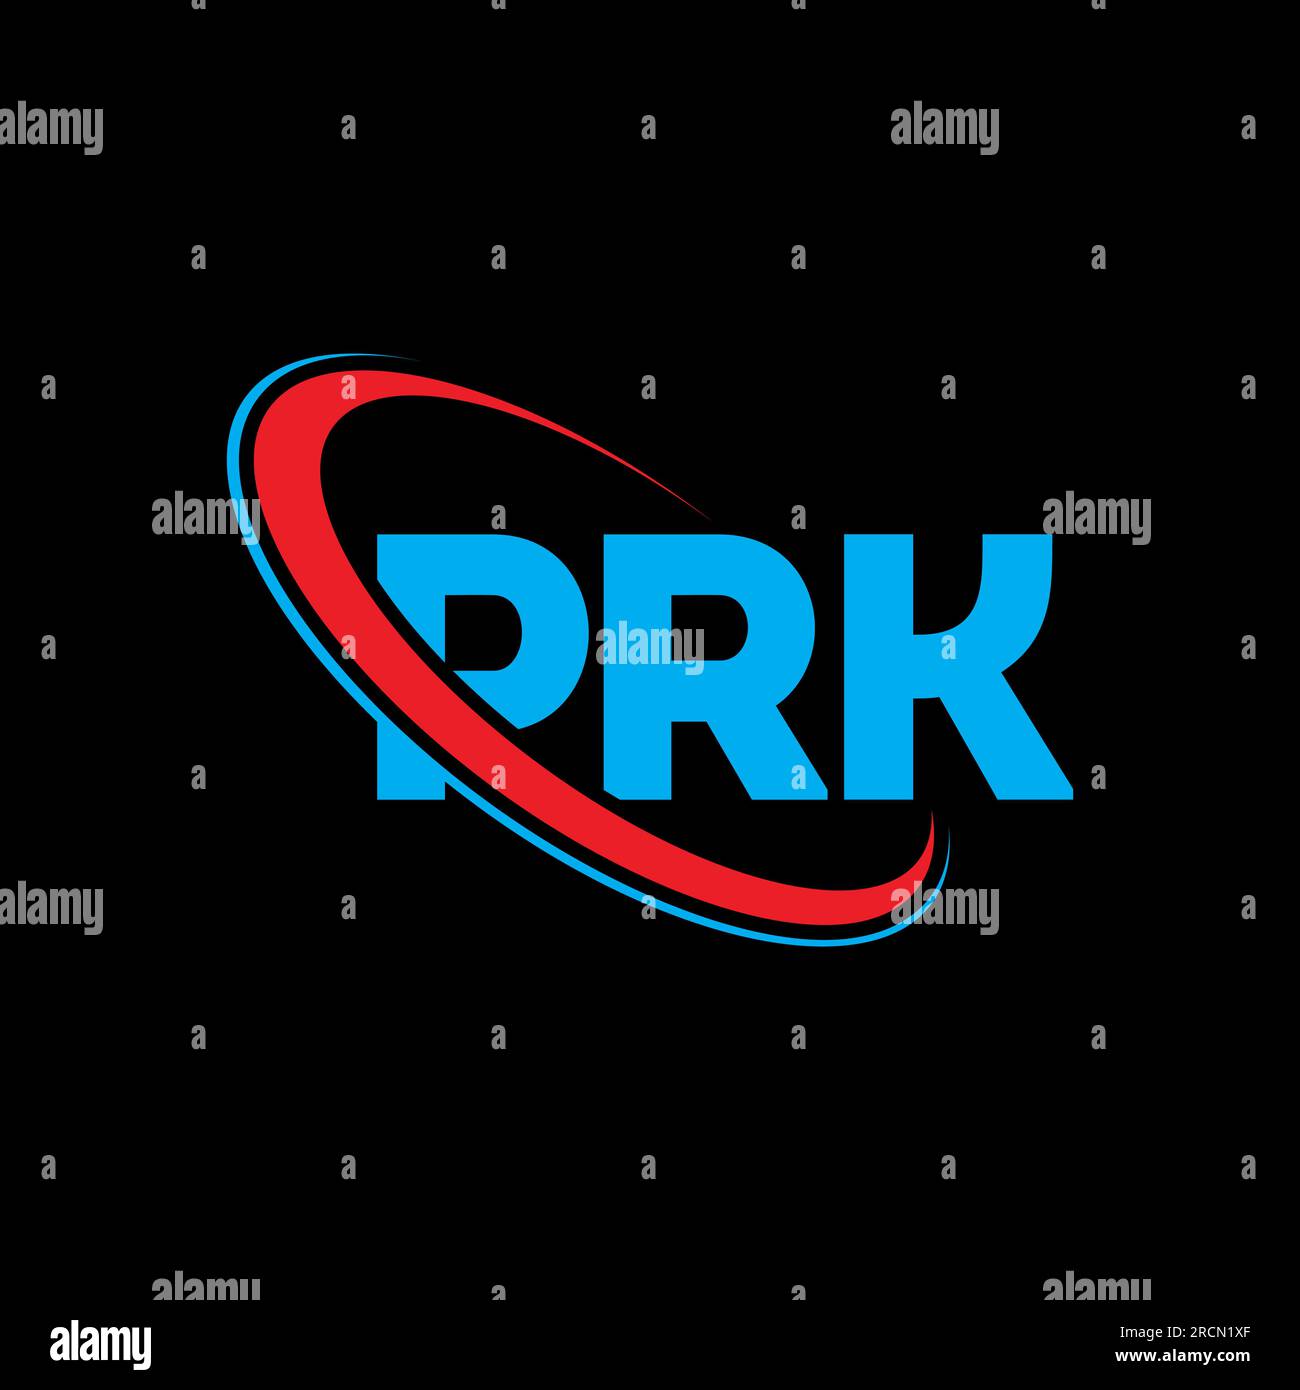 Design an eye catching initial letters, monogram logo by Prdaku